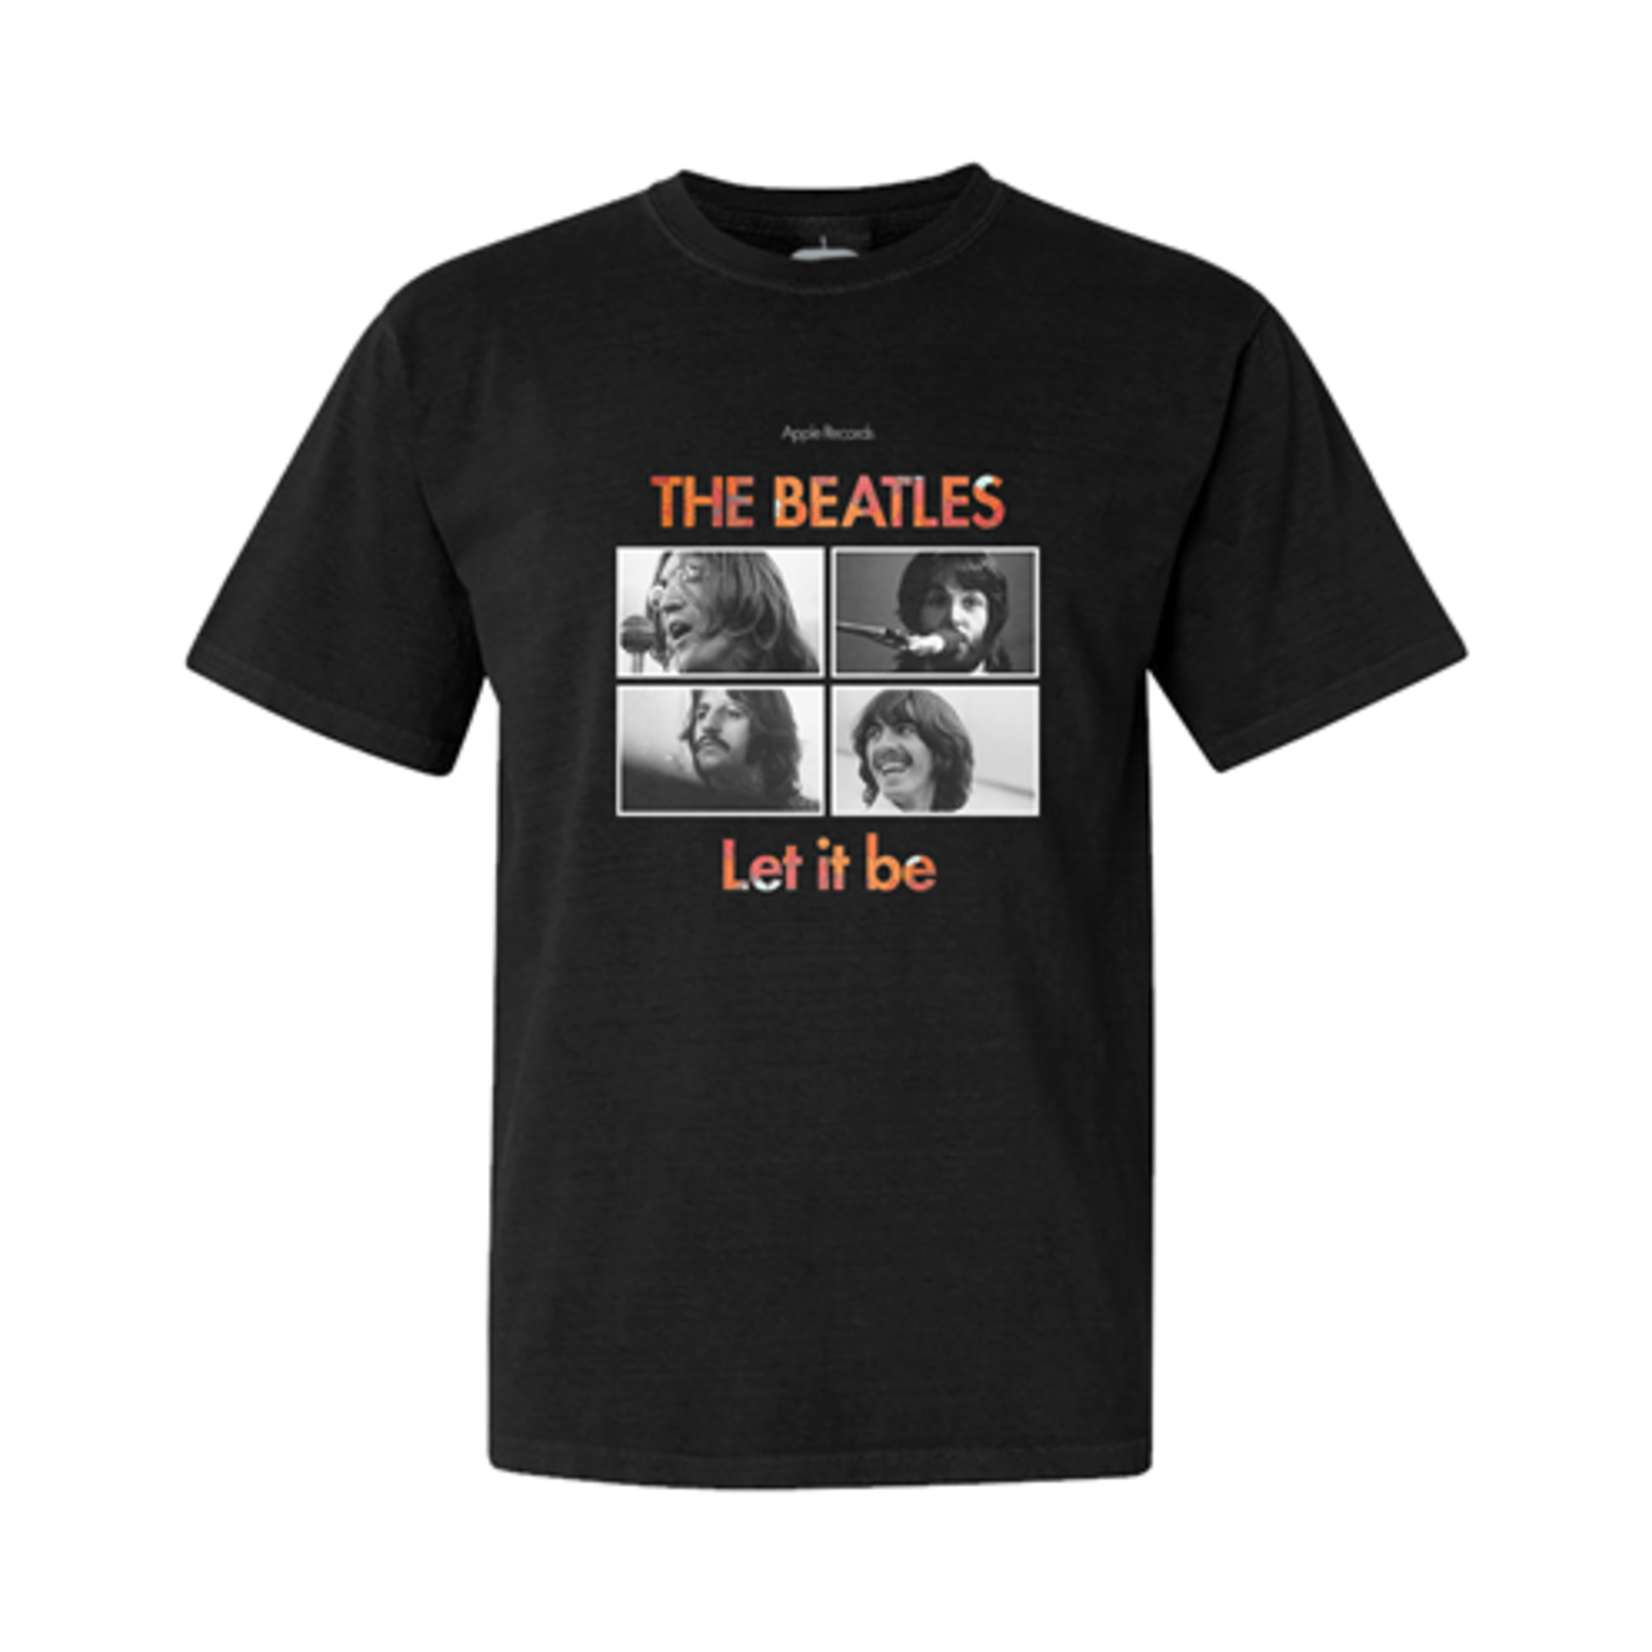 Uniqlo The Beatles Rock Band Let It Be Album Promo T-shirt